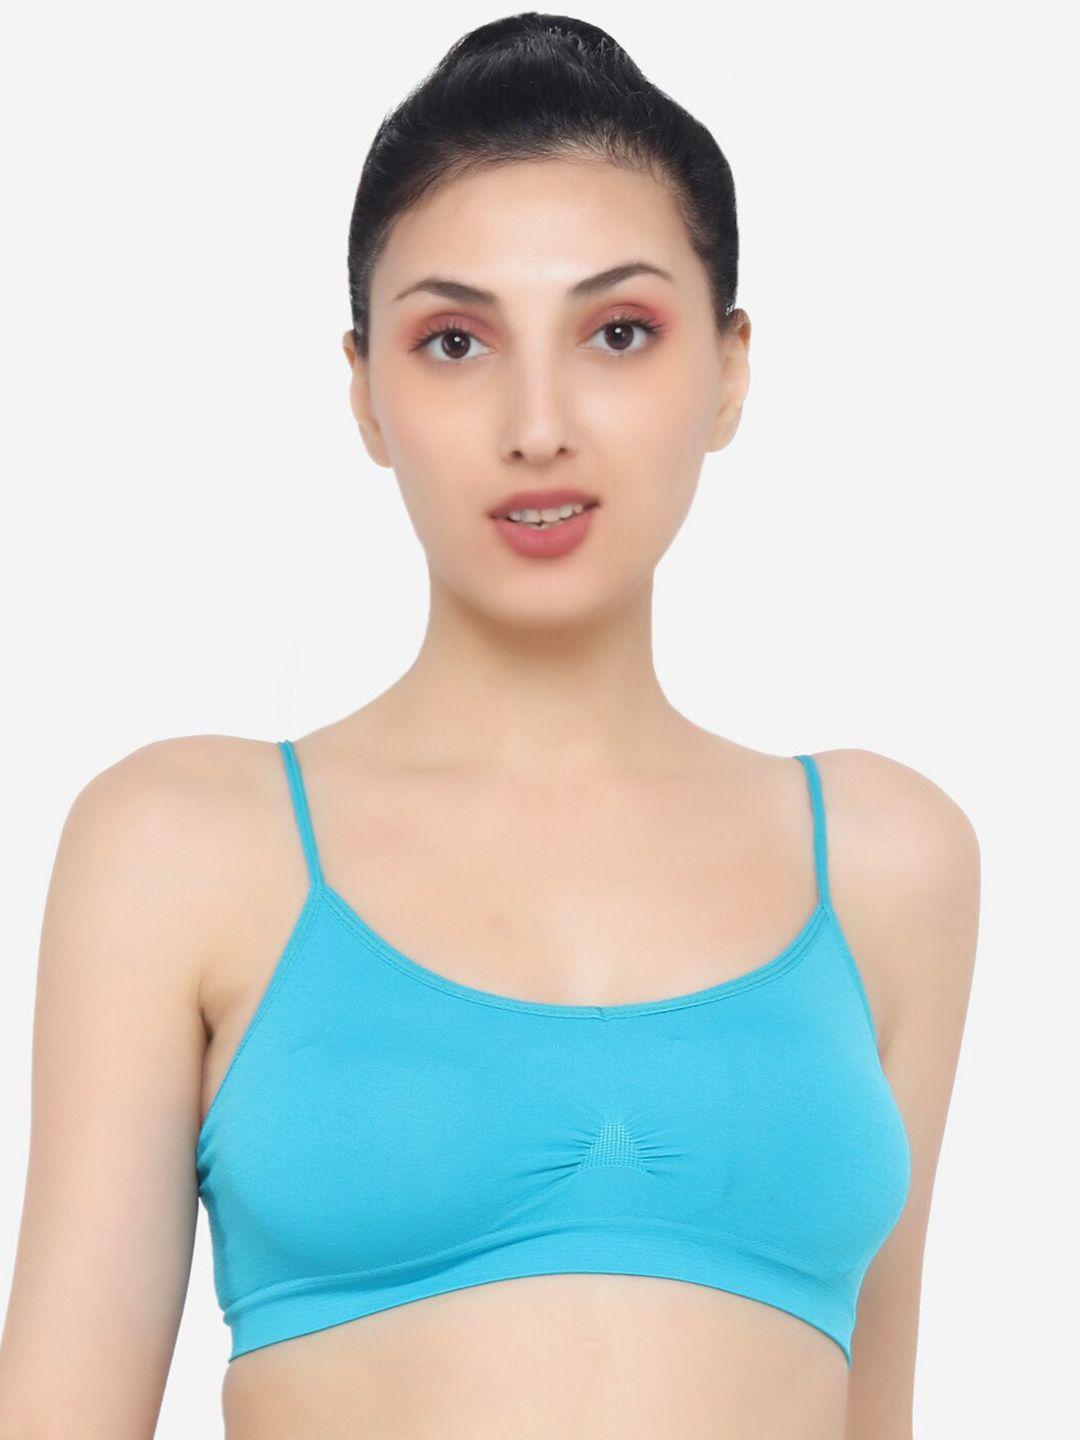 xoxo design turquoise blue non-padded sports bra